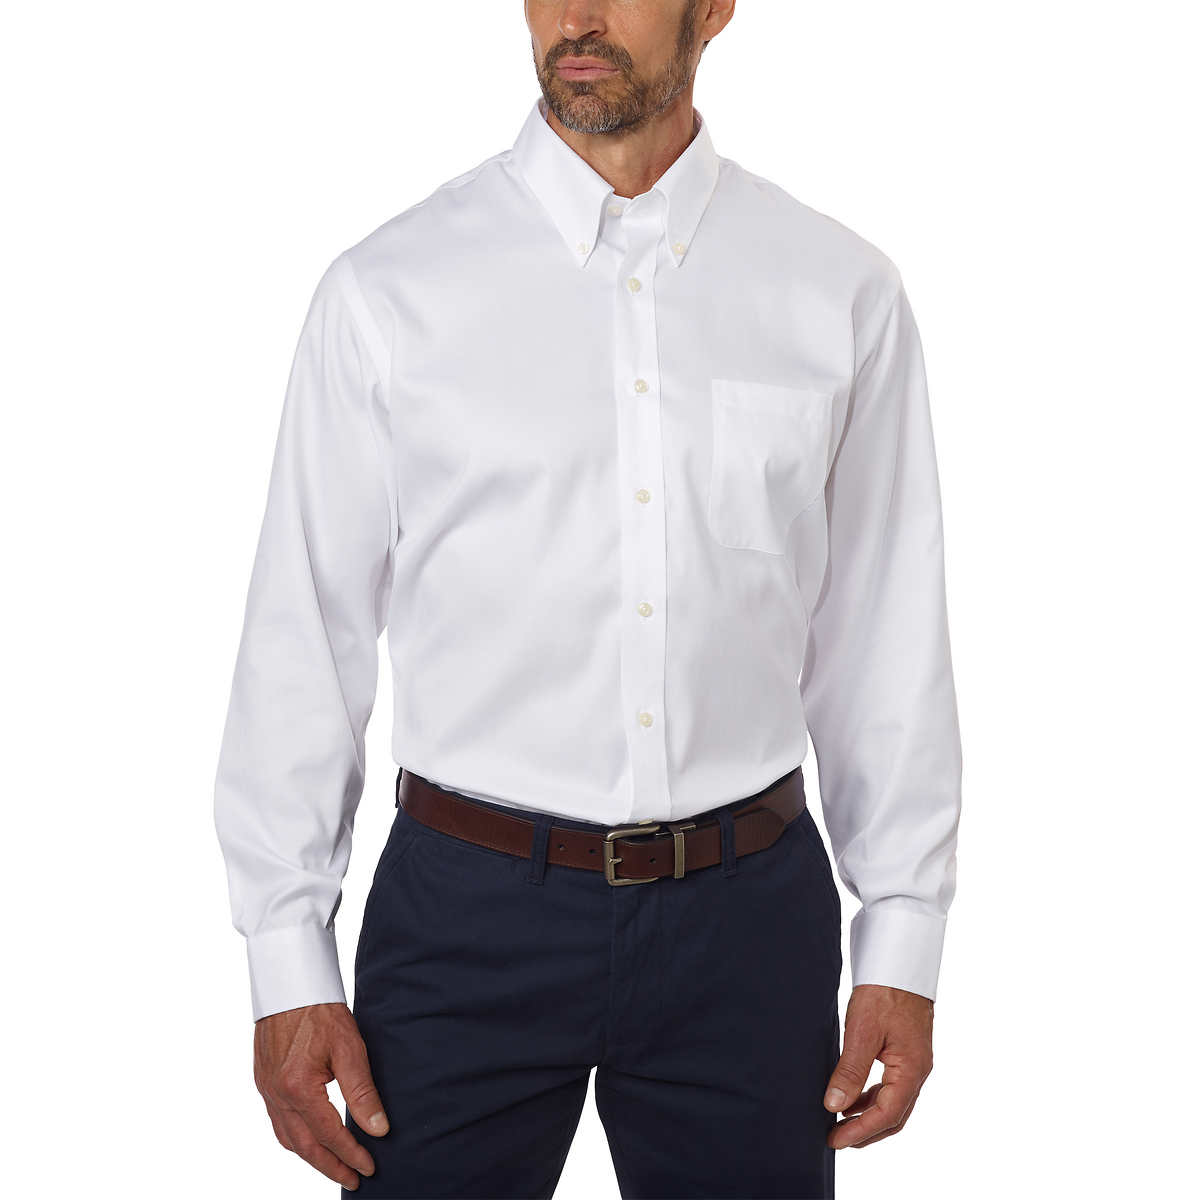 Kirkland Signature Men's Spread Collar 100% cotton 100/2 dress Shirts 3 sizes 